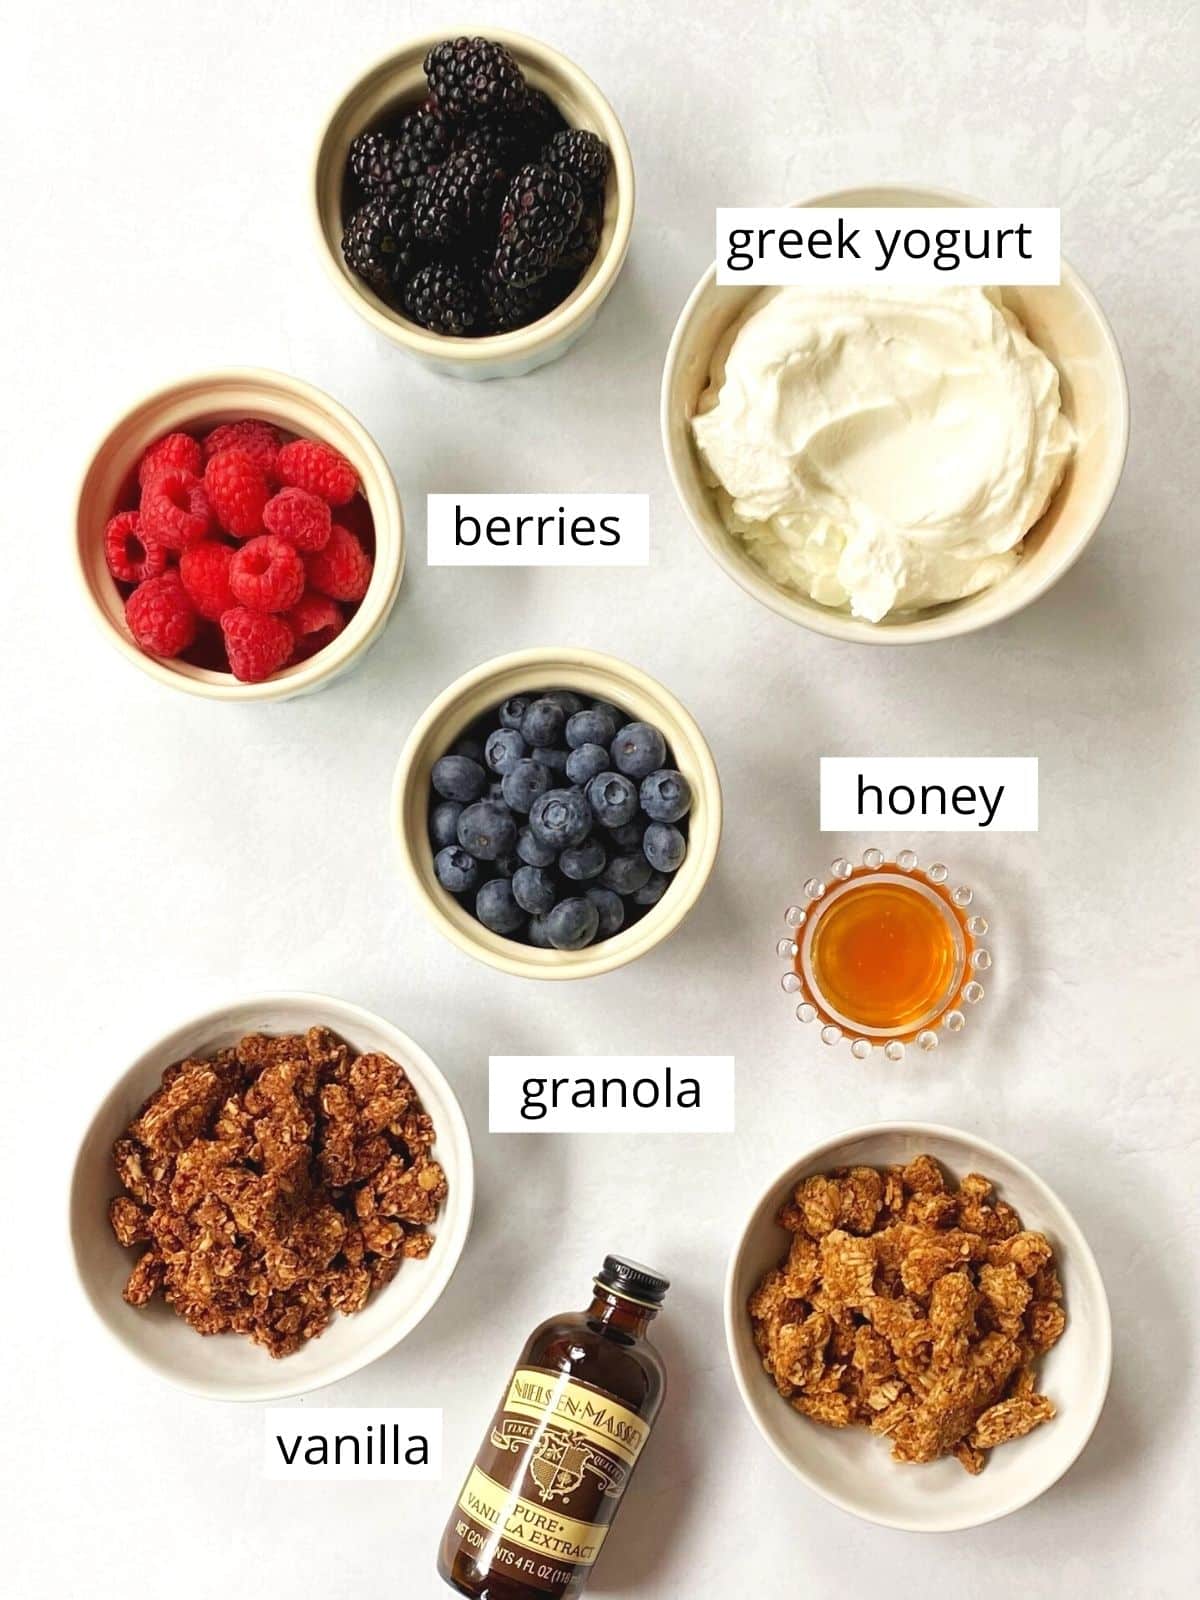 ingredients for greek yogurt with berries and granola.